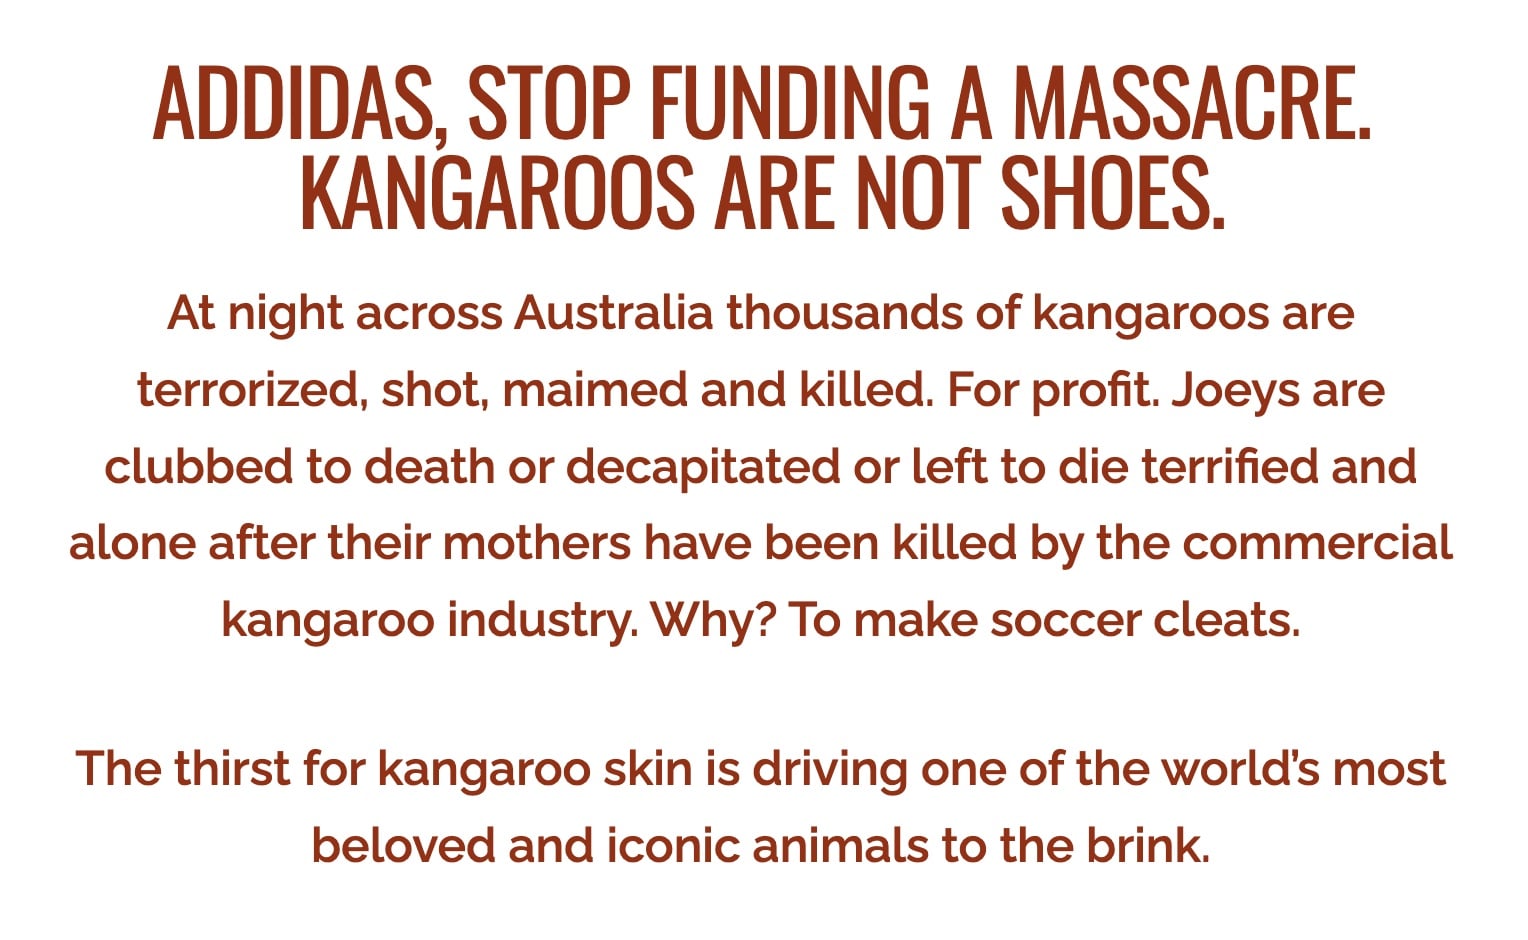 The message to Adidas at KangaroosAreNotShoes.org